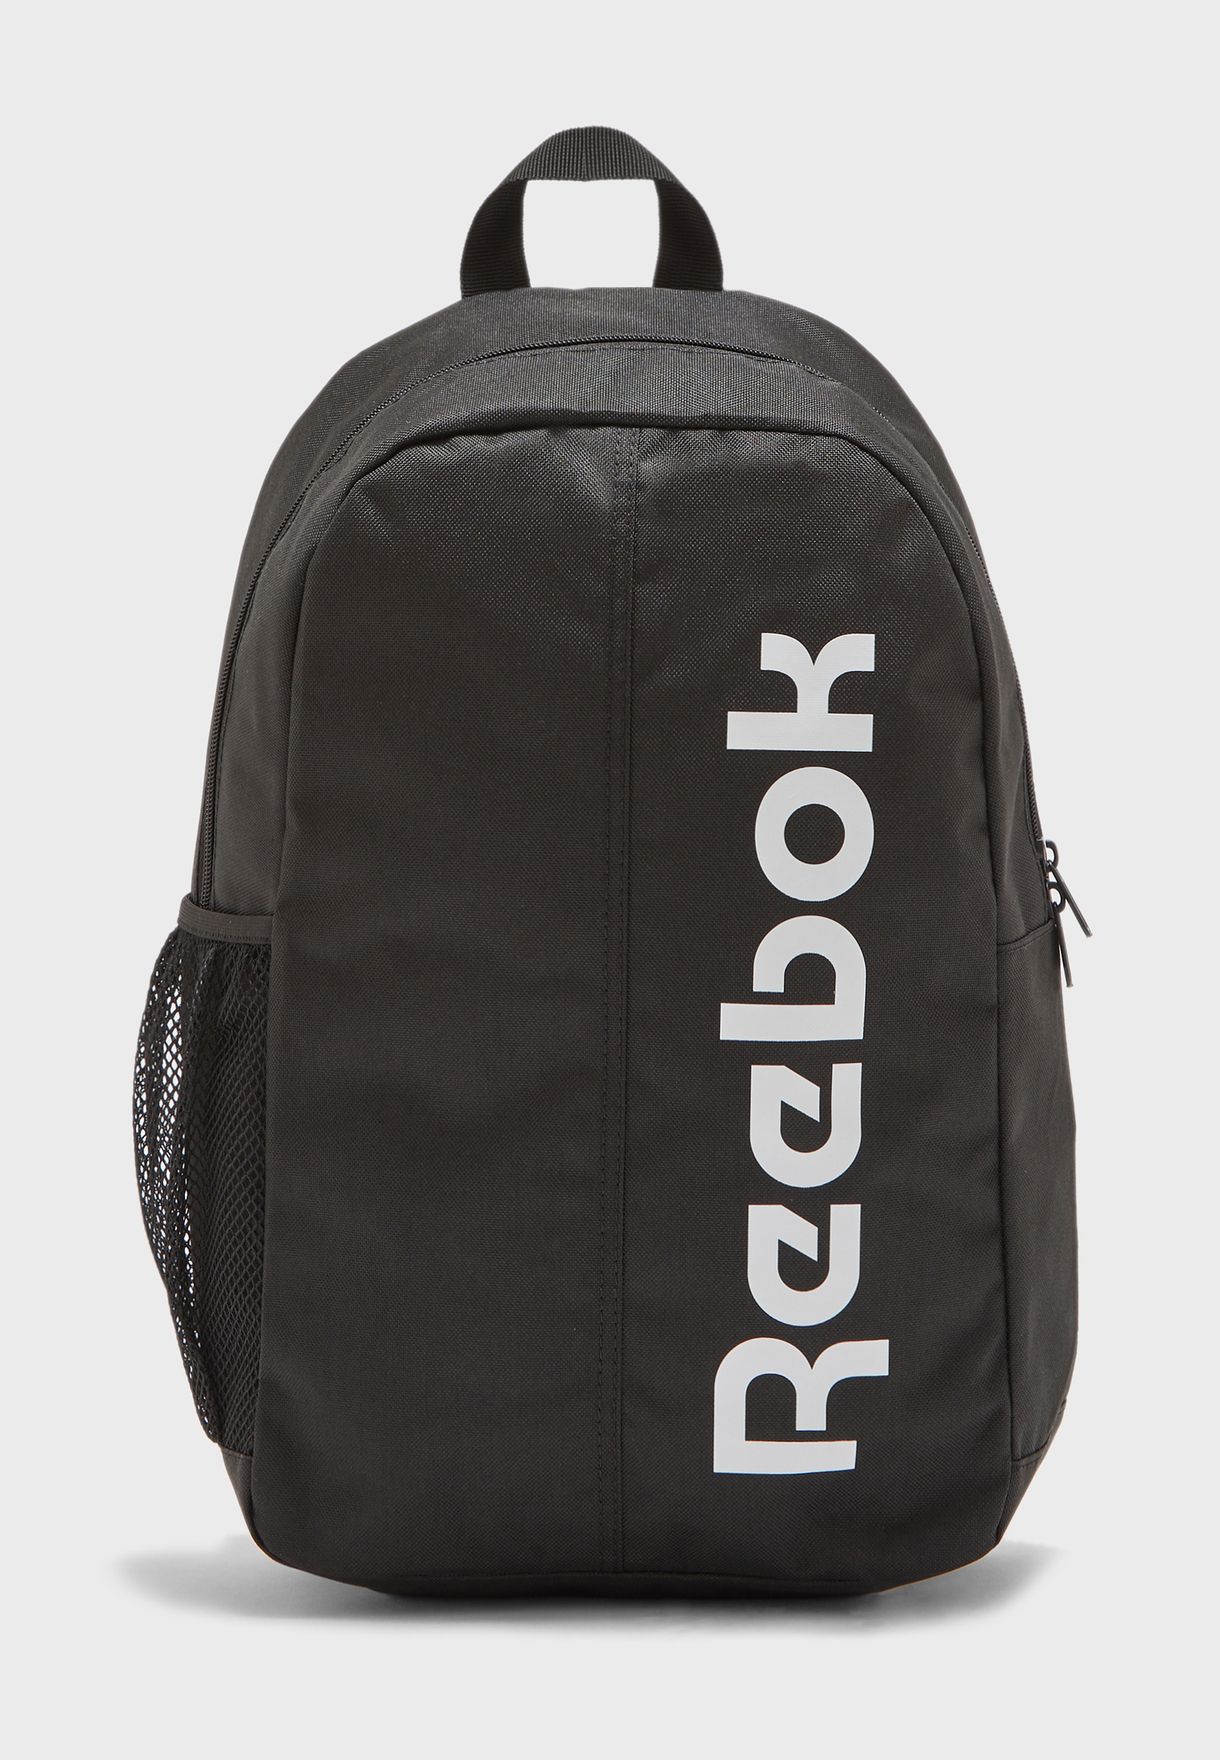 reebok bags for boys